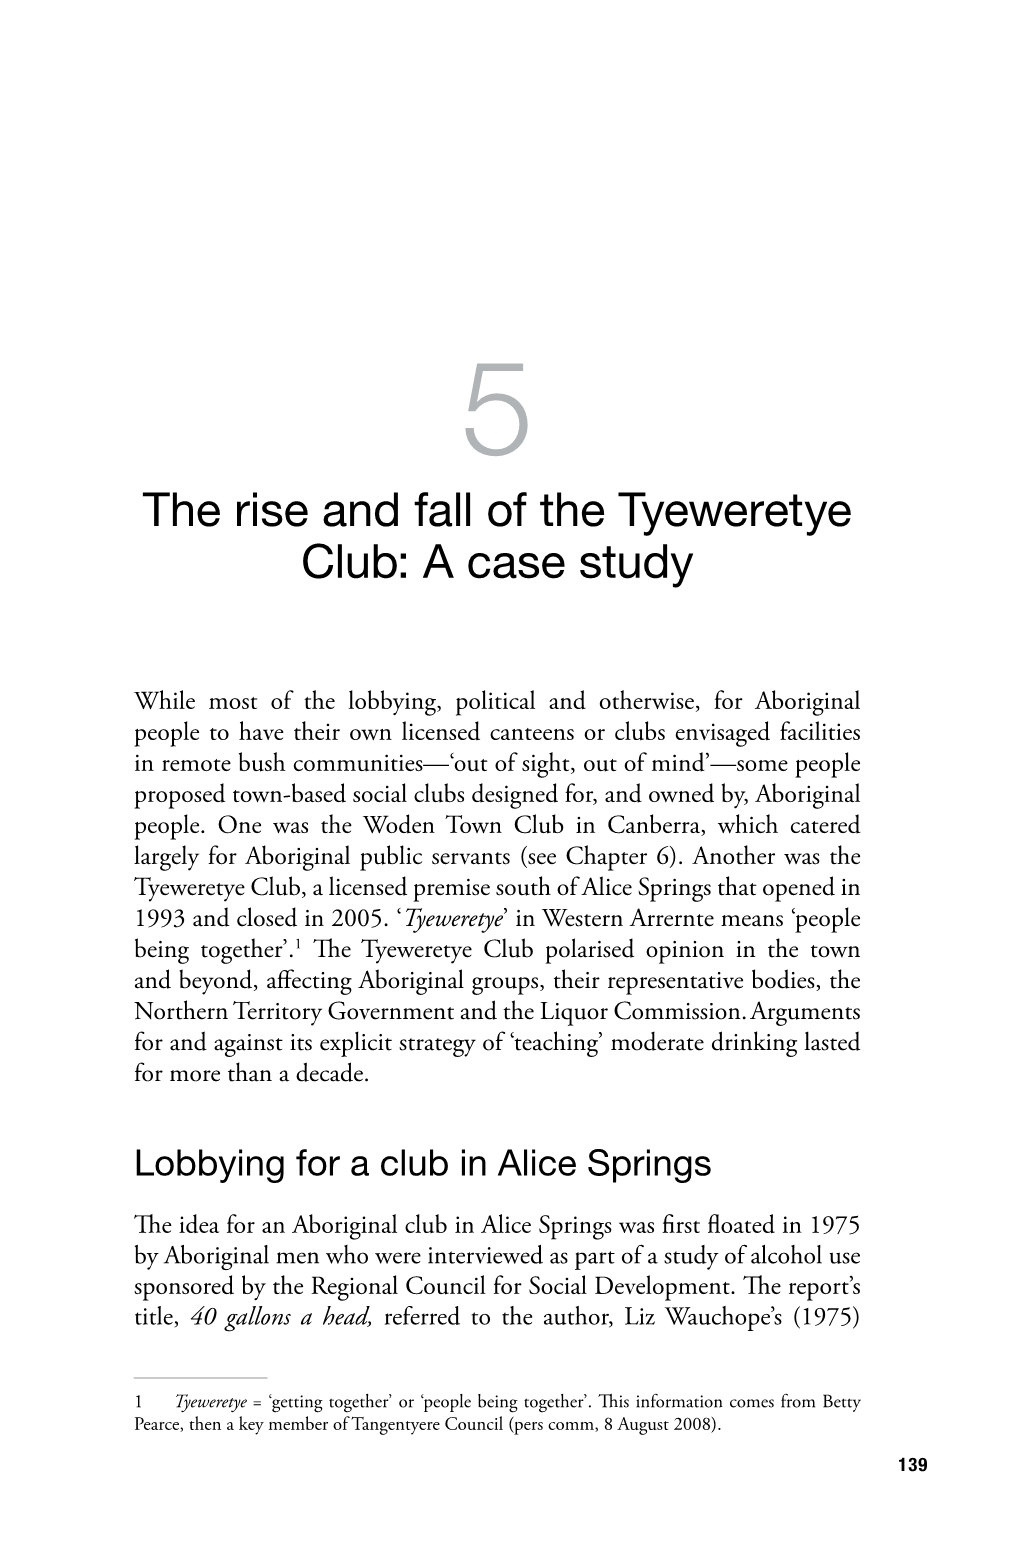 5. the Rise and Fall of the Tyeweretye Club